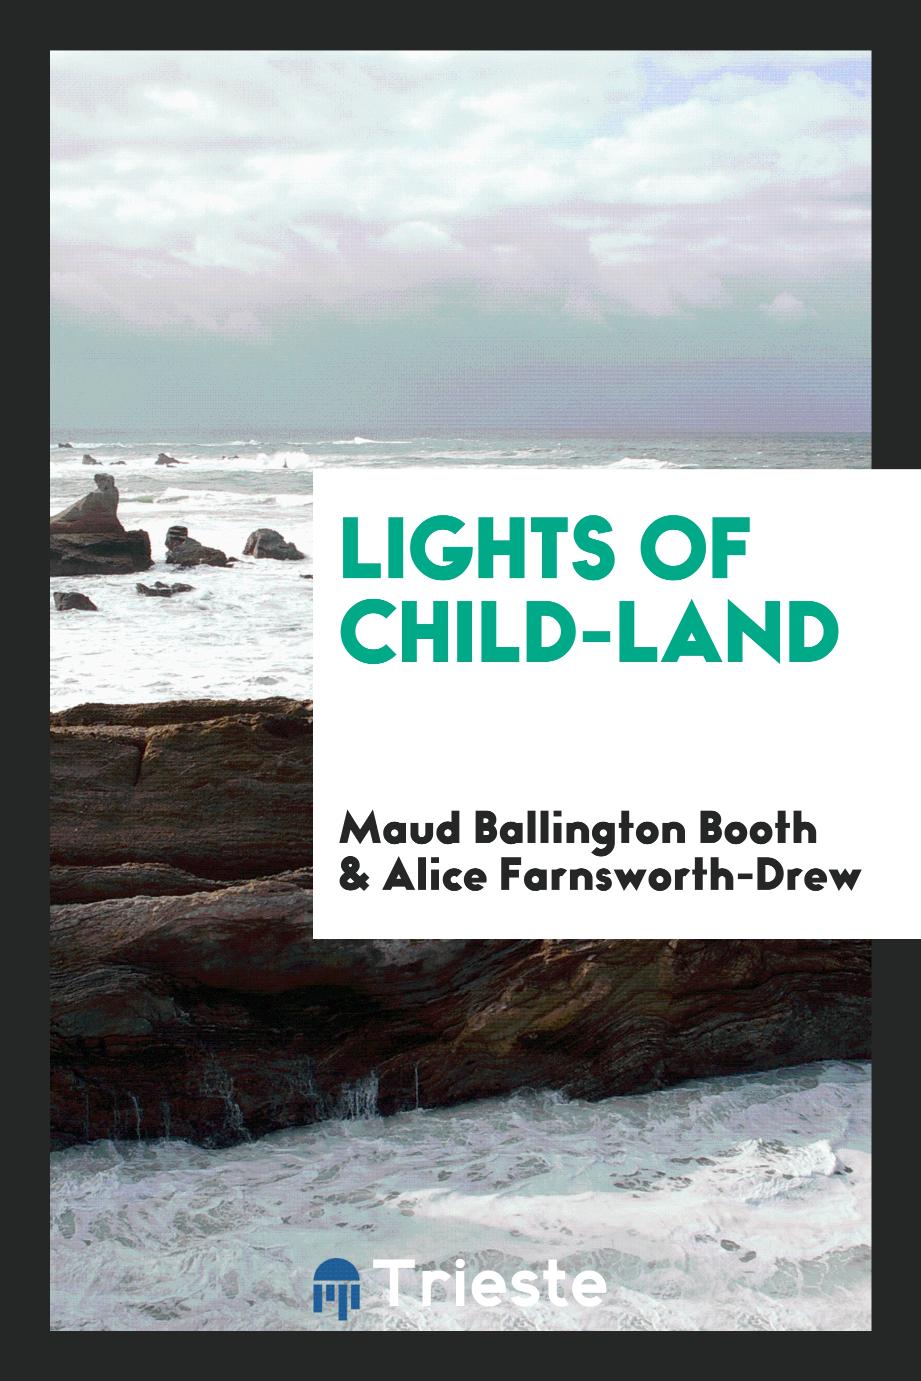 Lights of child-land